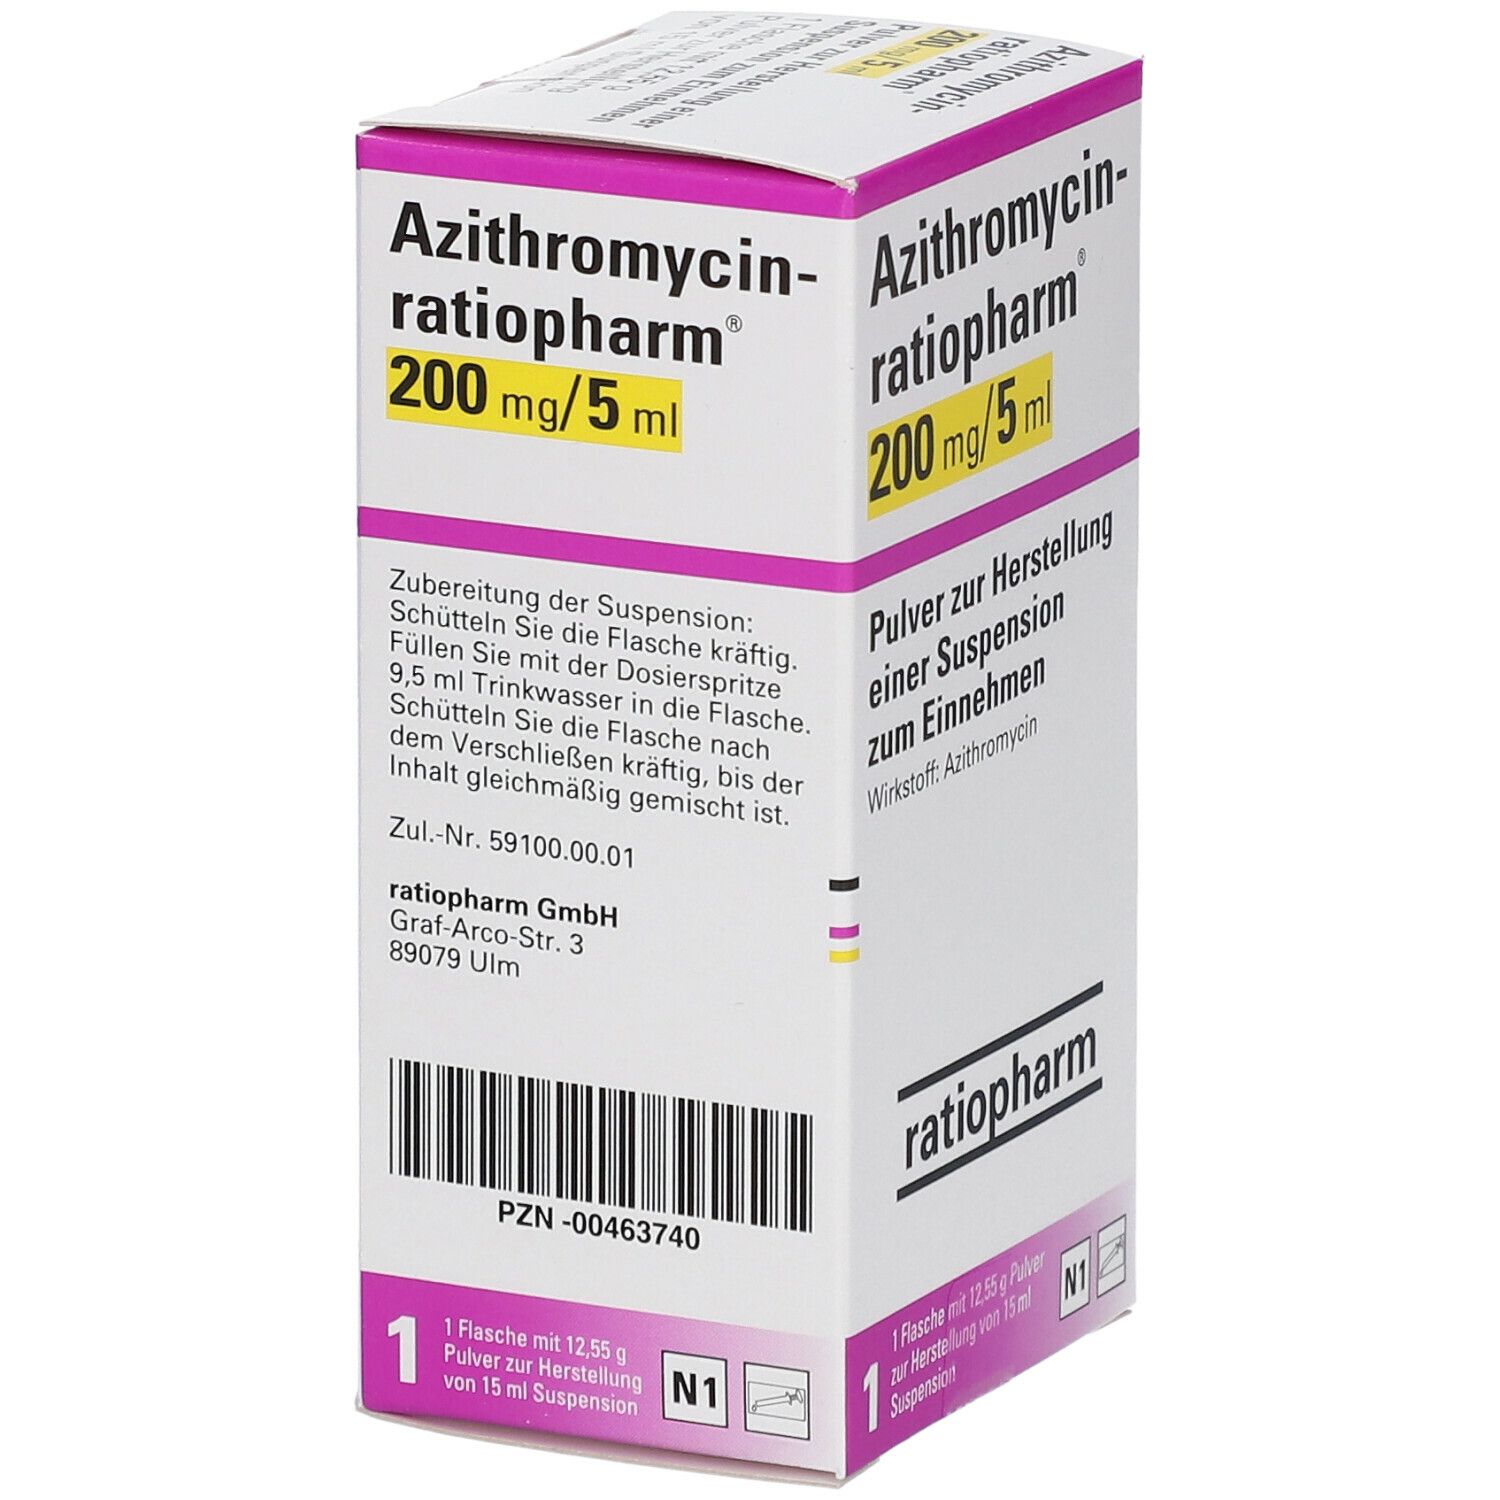 Azithromycin-ratiopharm® 200 mg/5 ml